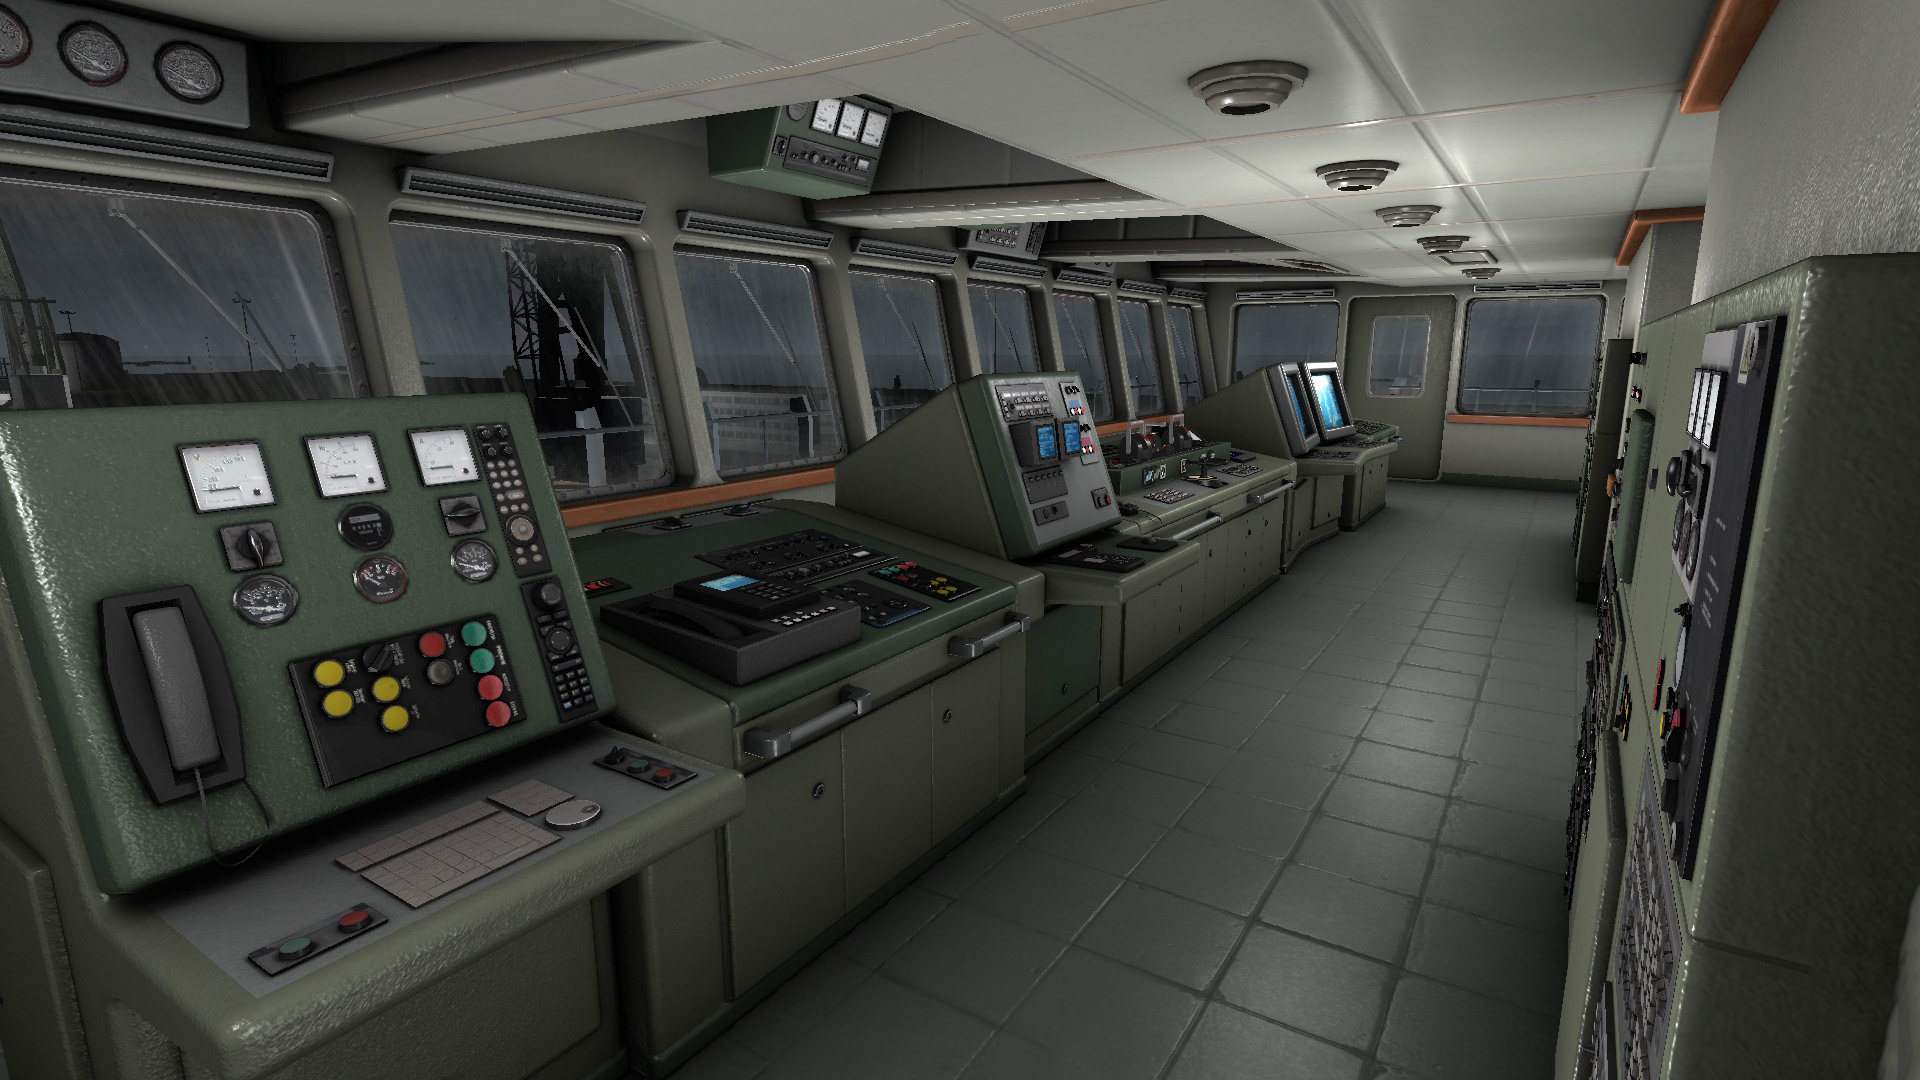 european ship simulator advanced graphic settings